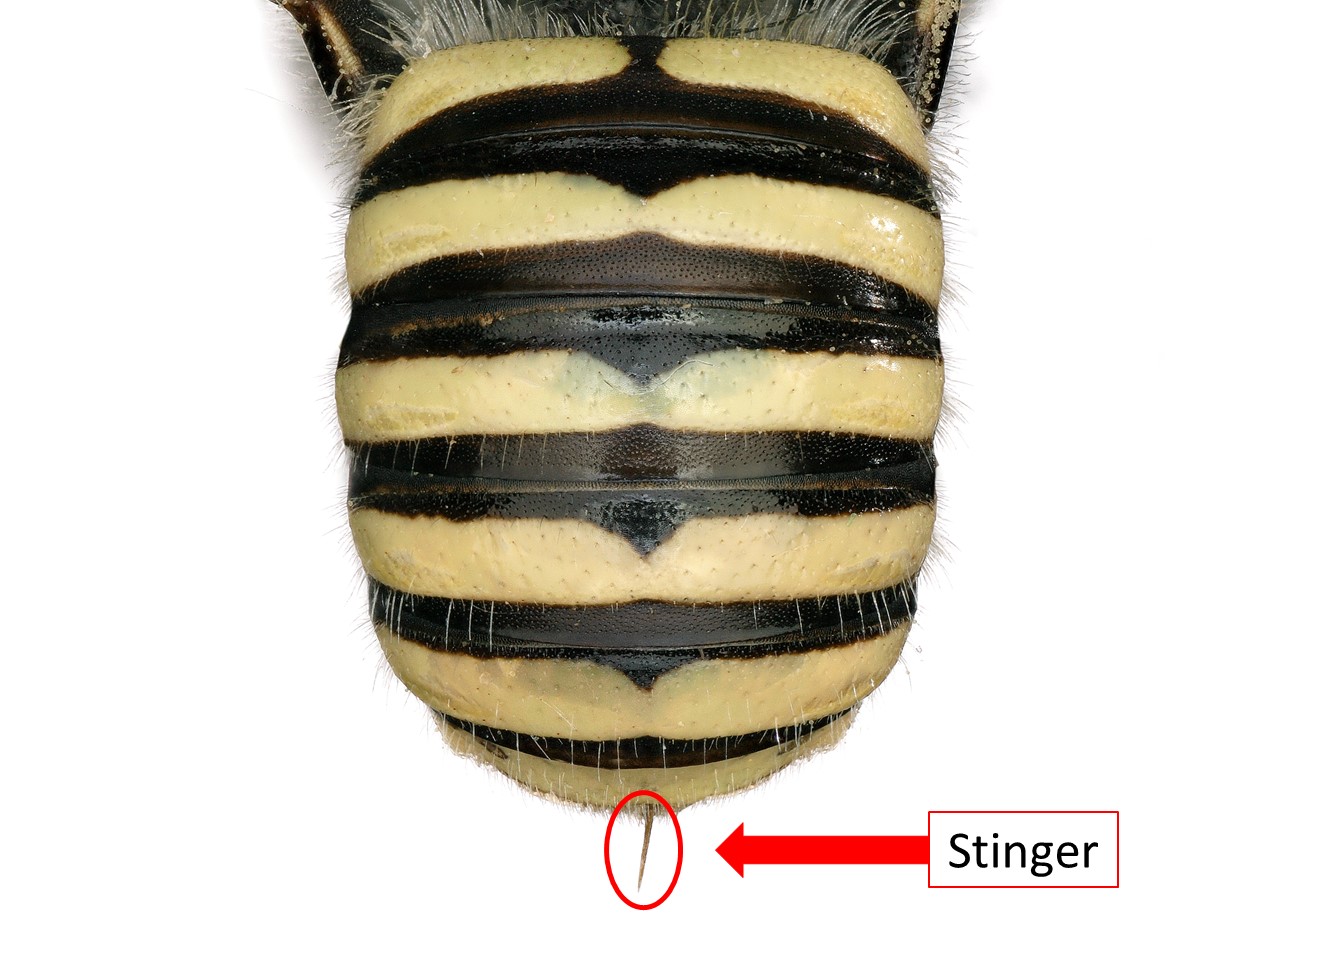 	Female with stinger